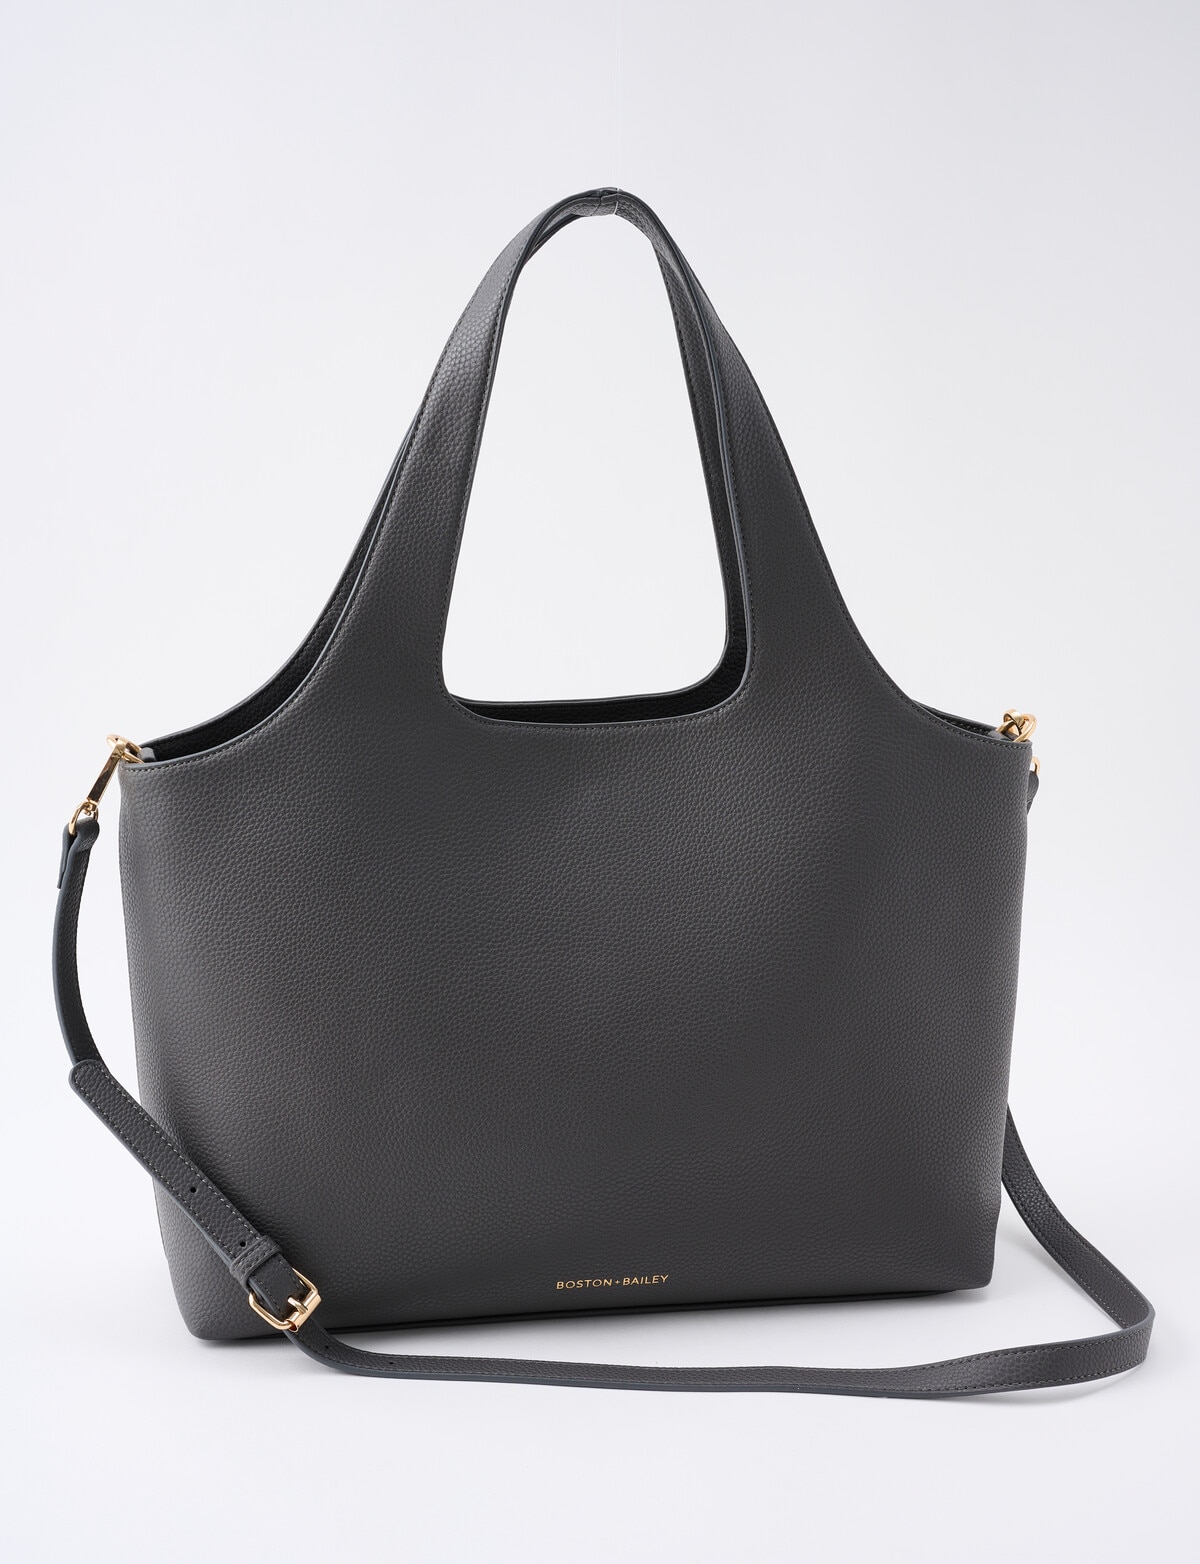 Boston + Bailey Quinn Tote Bag, Charcoal - Handbags